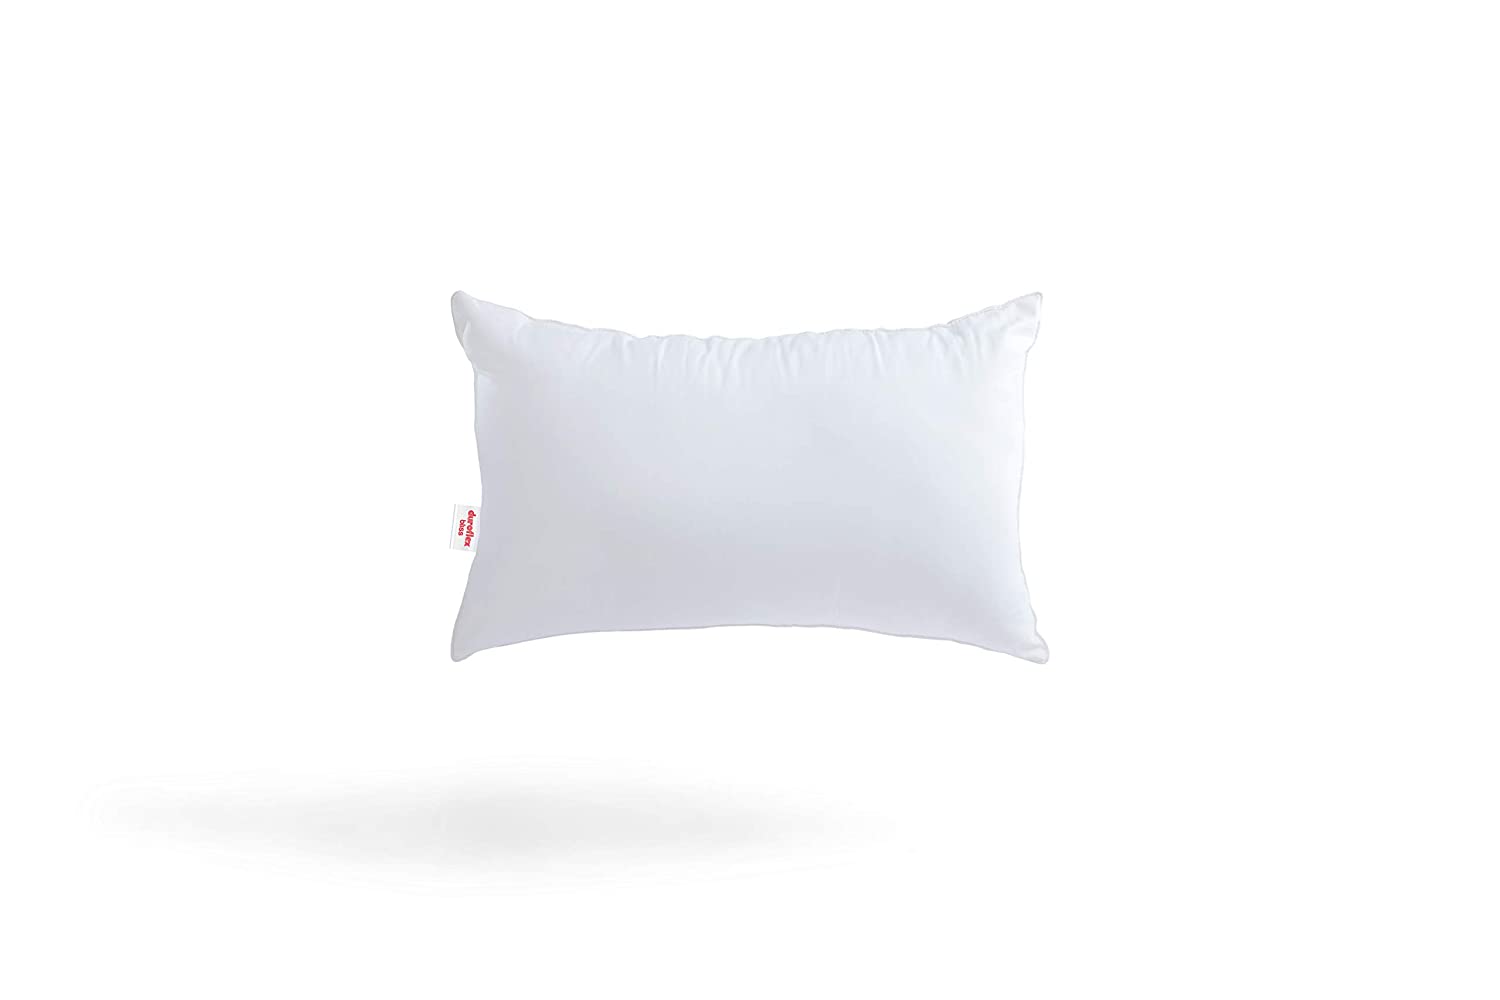 PRO AIR Side Sleeper U-Shaped Pillow Sleep Buddy Orthopaedic Back Neck Support